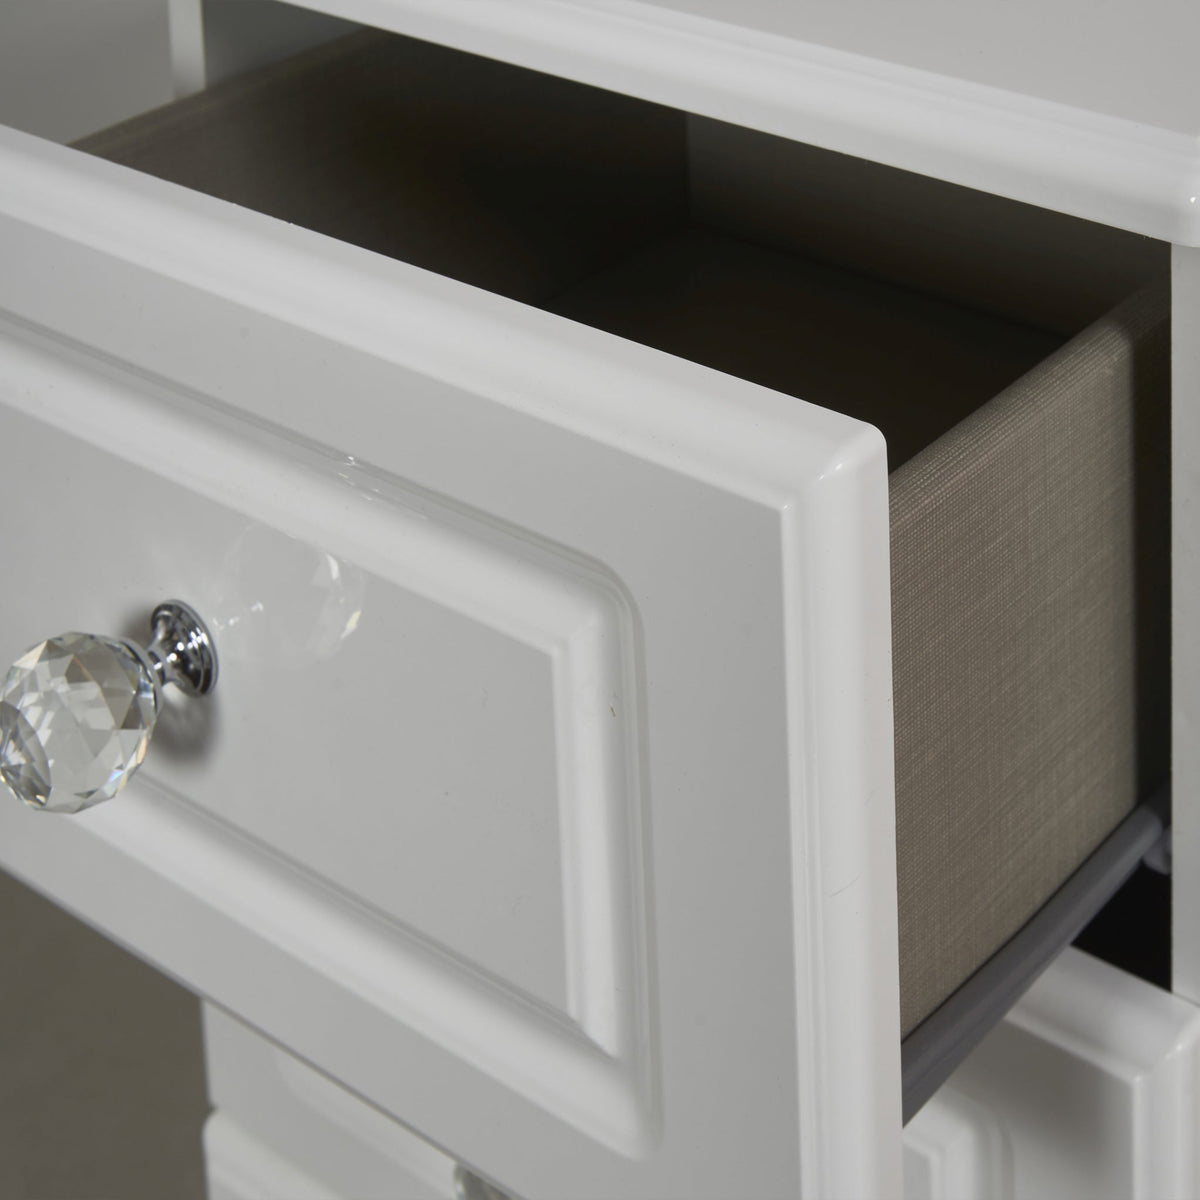 Kinsley White Gloss 3 Drawer Bedside Cabinet from Roseland Interior